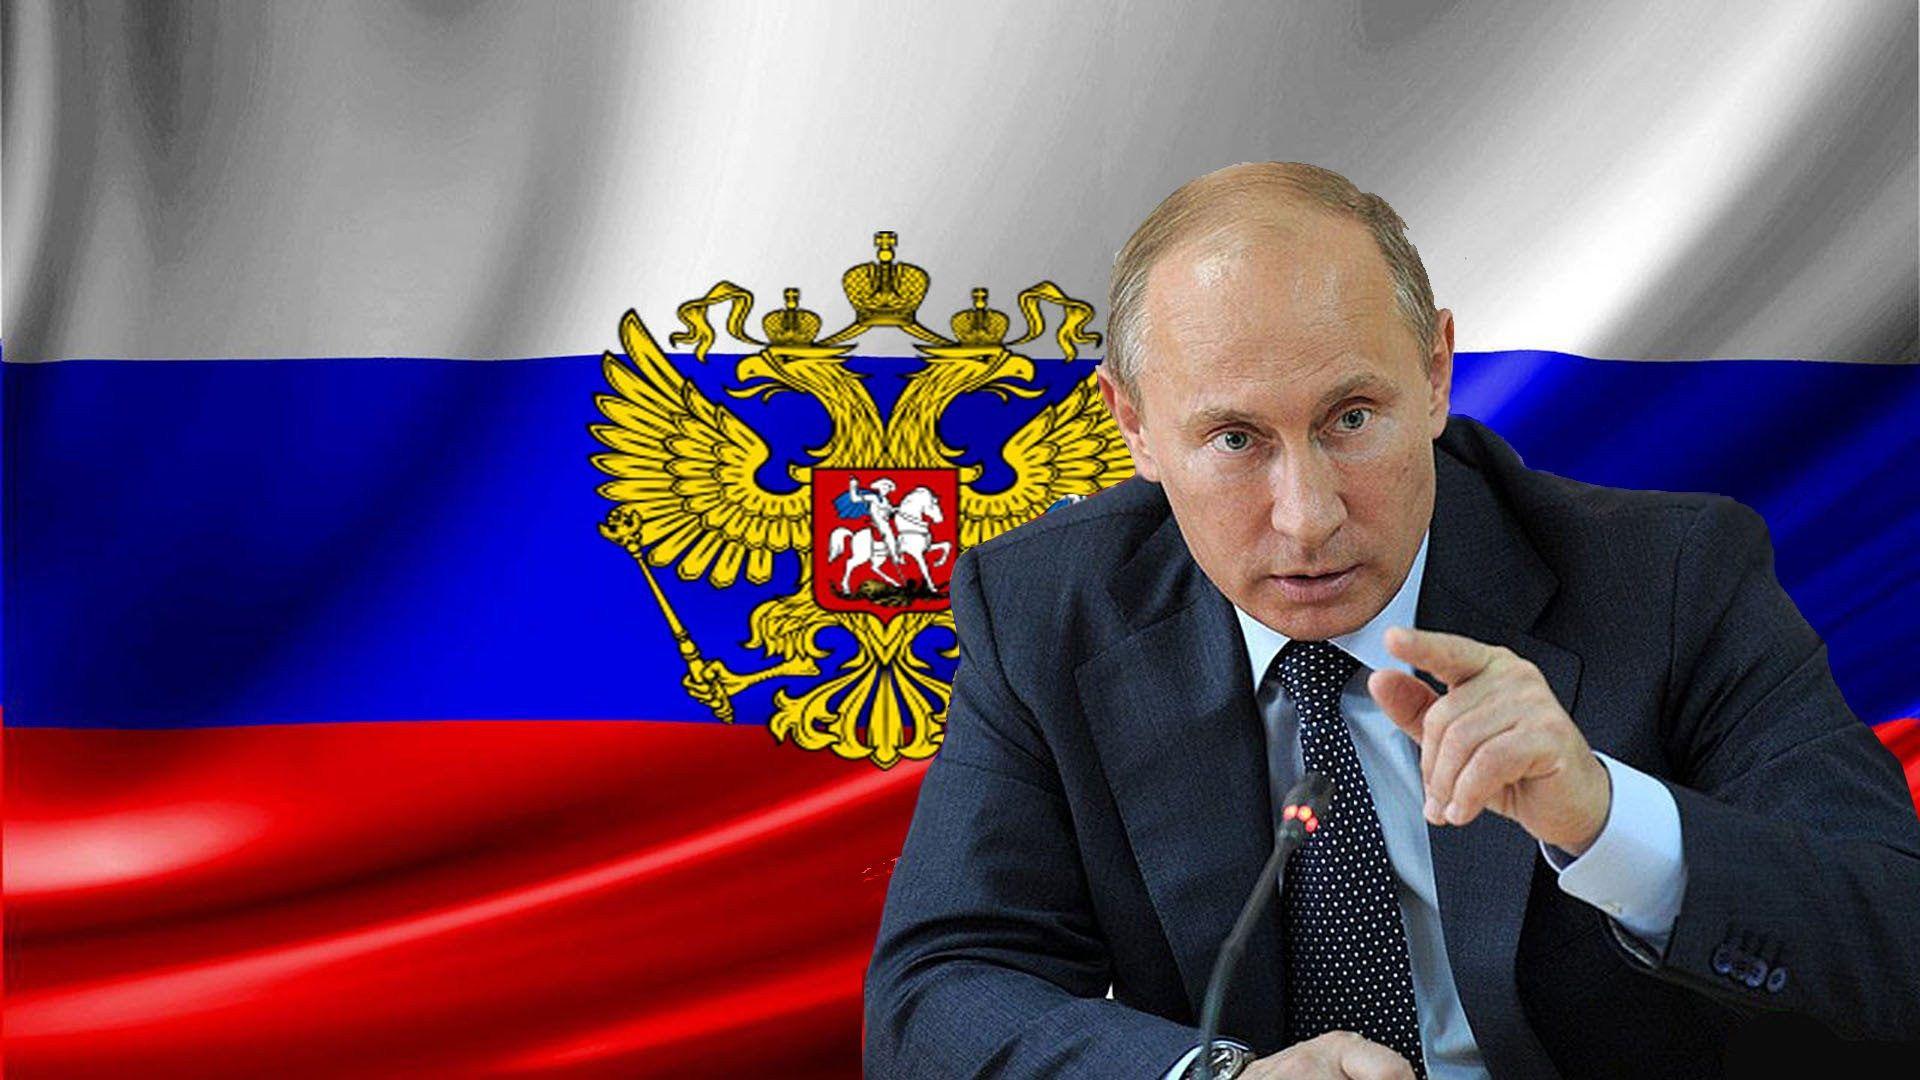 Vladimir Putin Wallpaper and Background Image